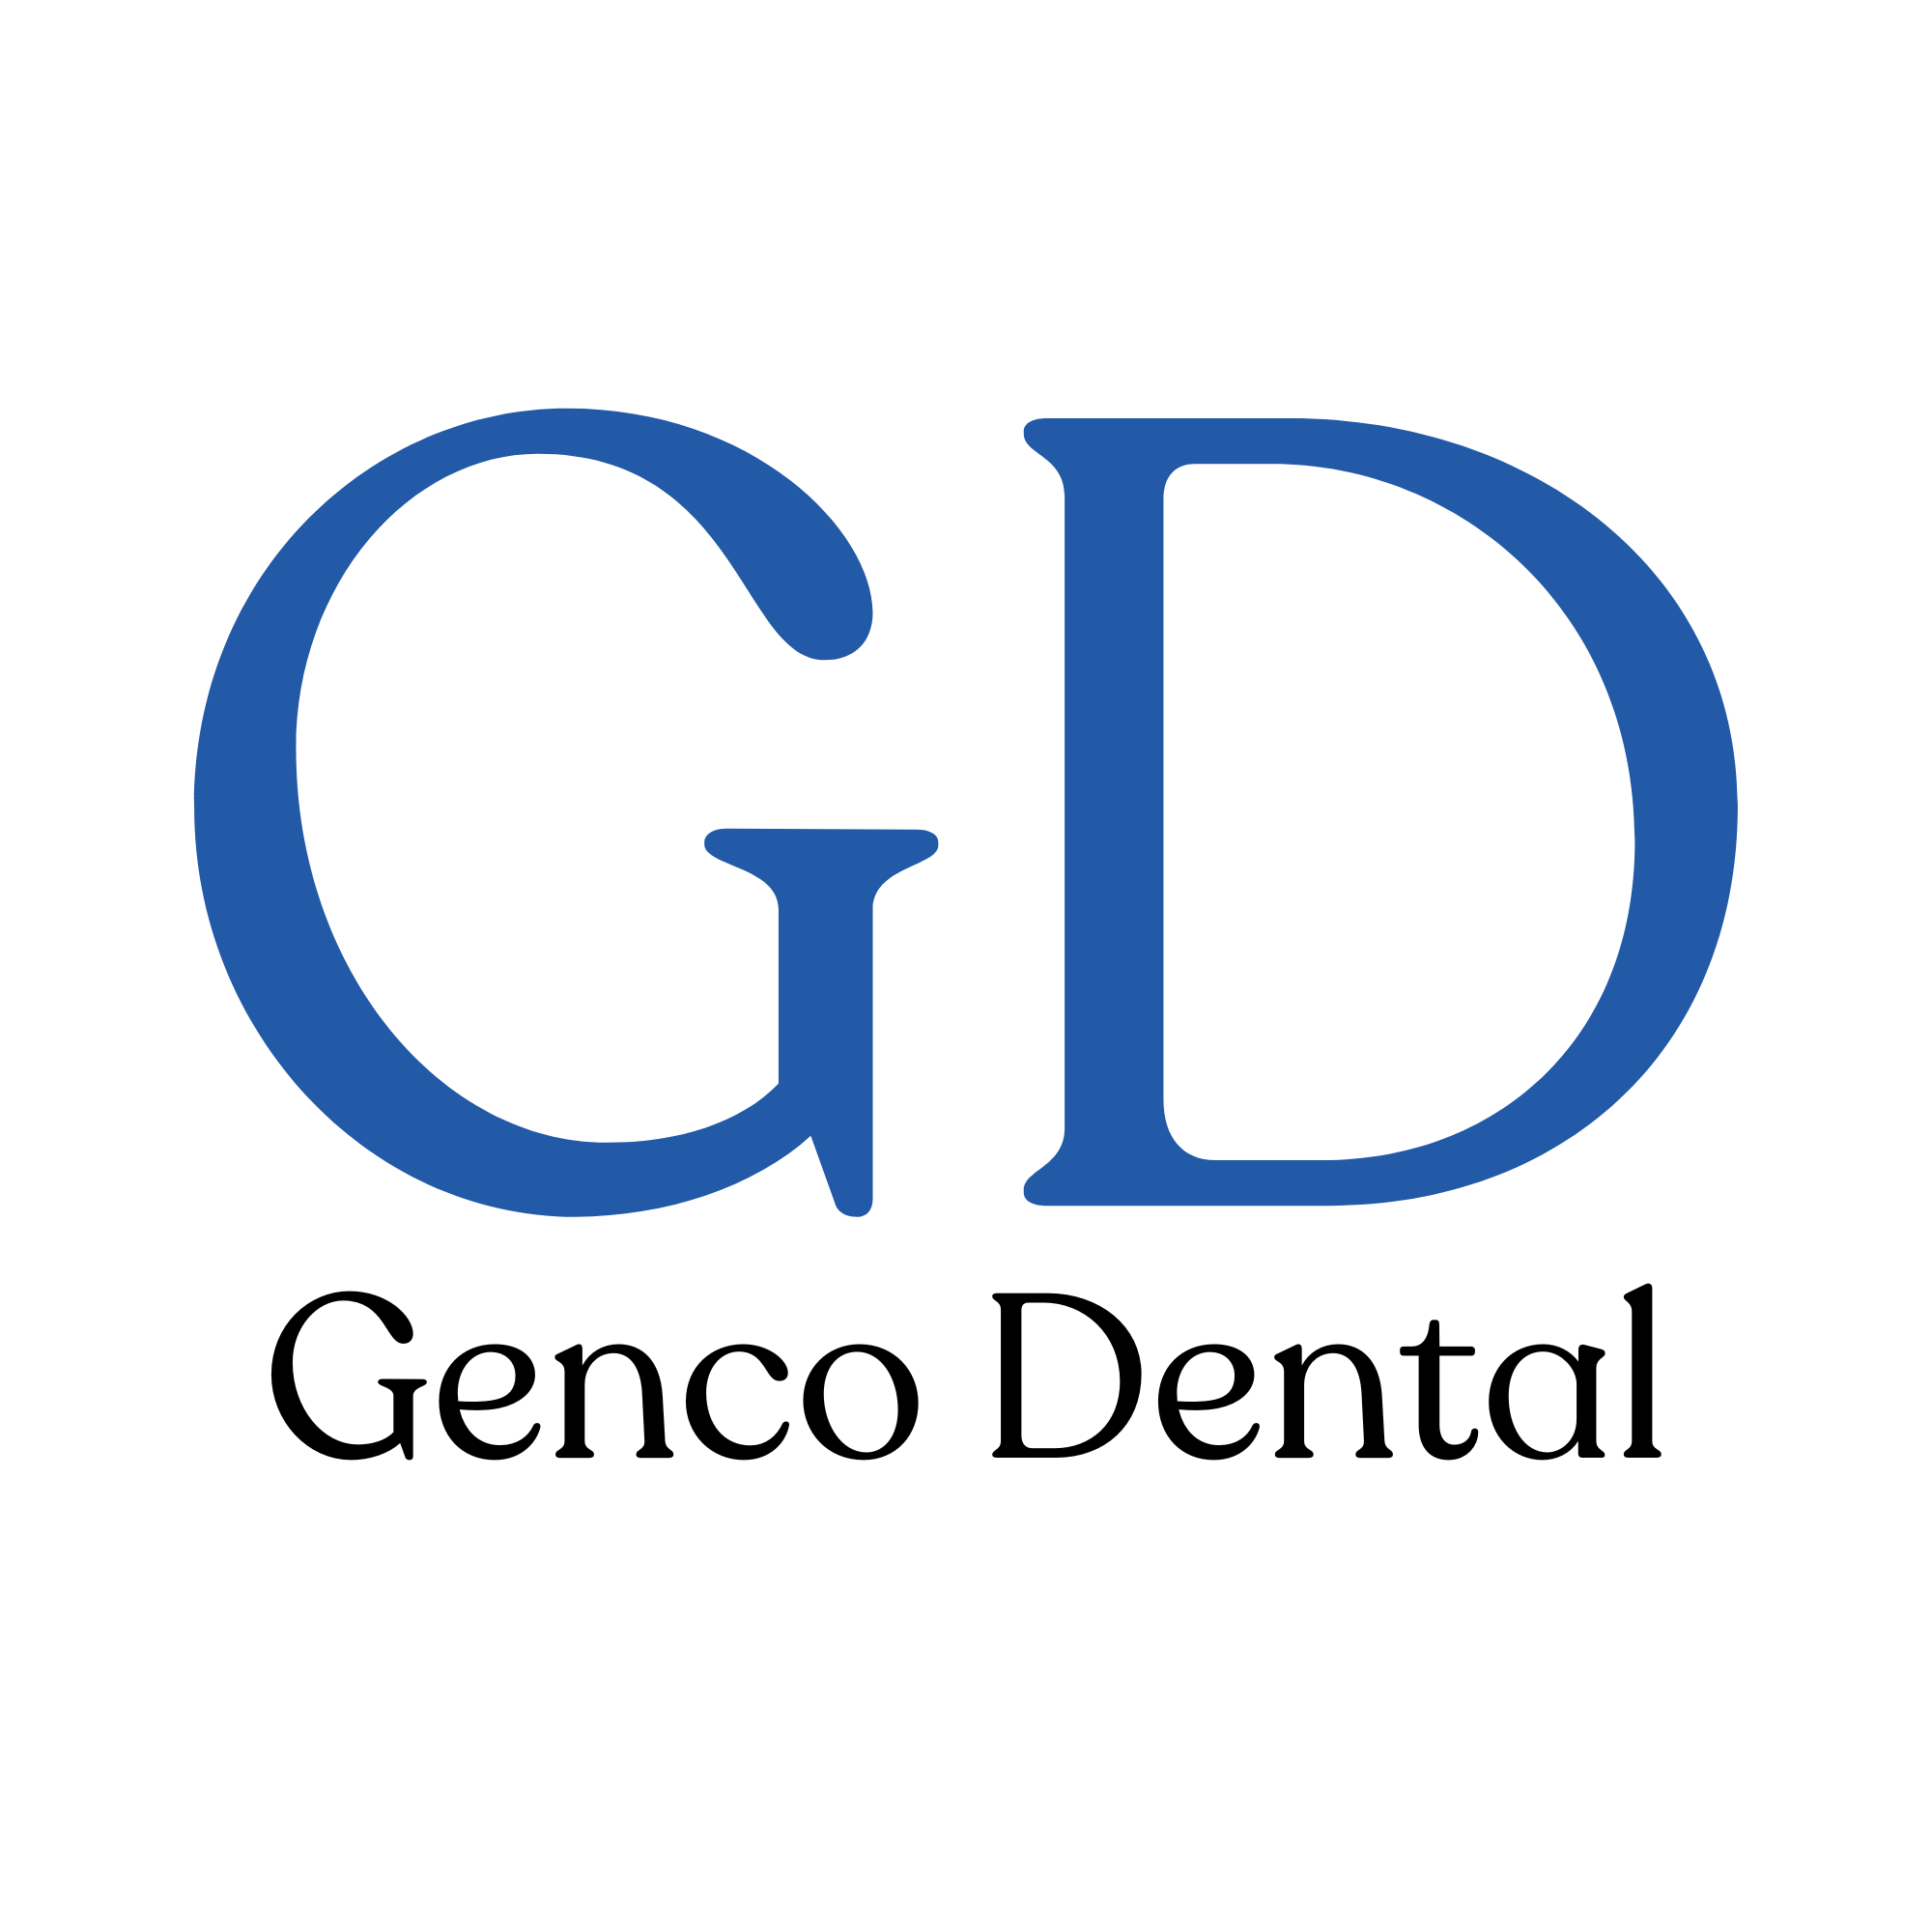 Genco Dental